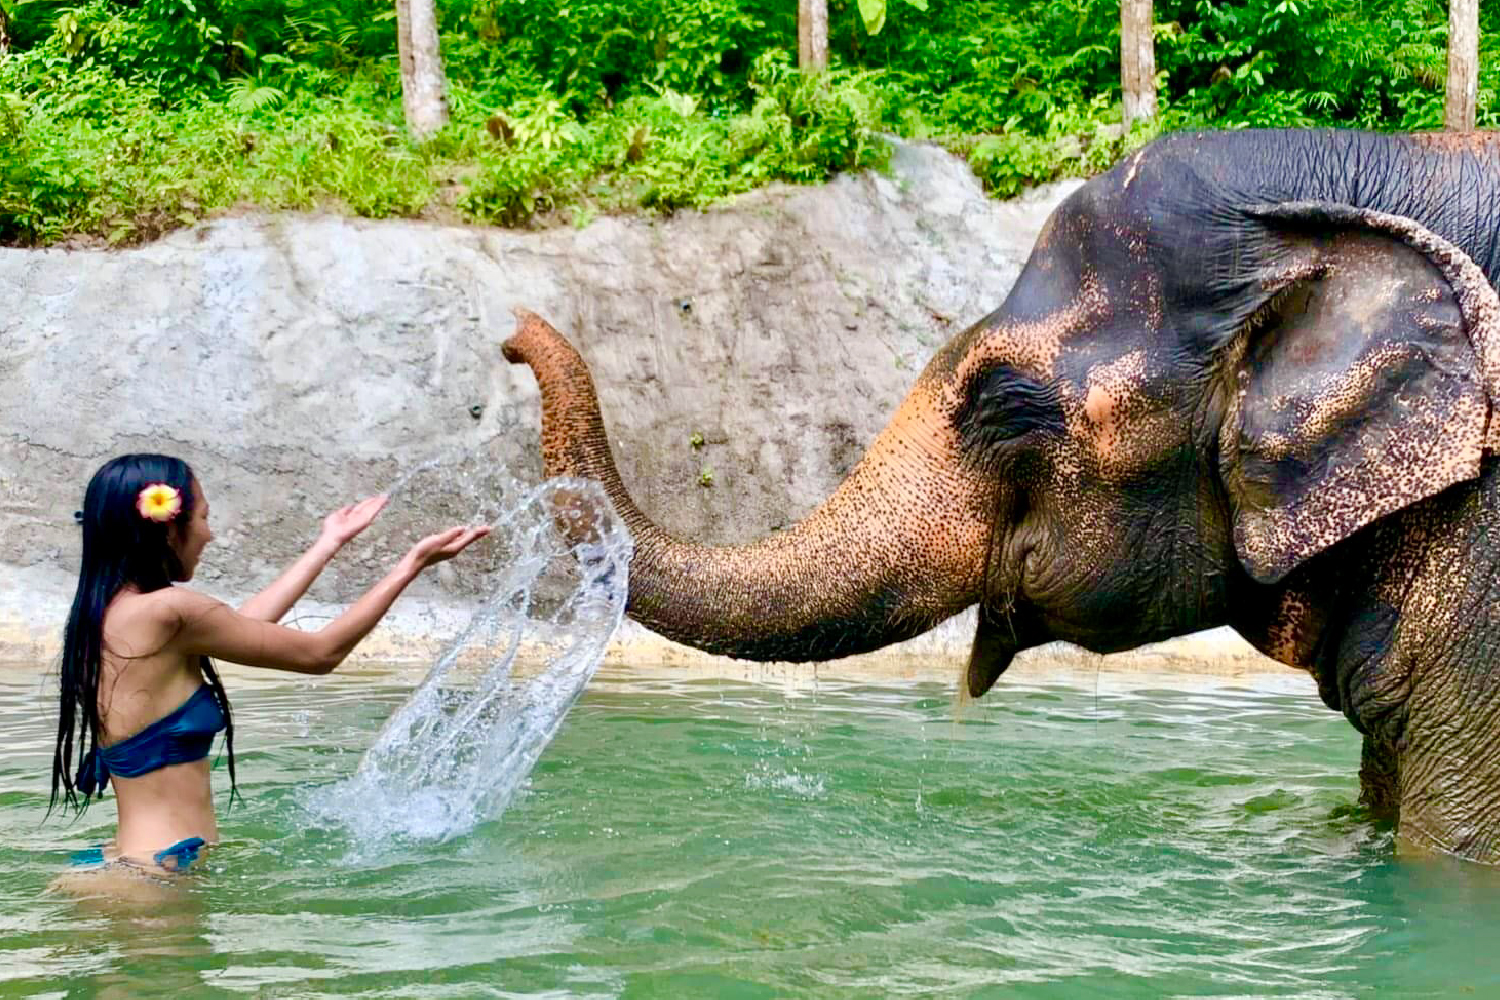 Elephant Bath and Feed Program By CER (Phuket)